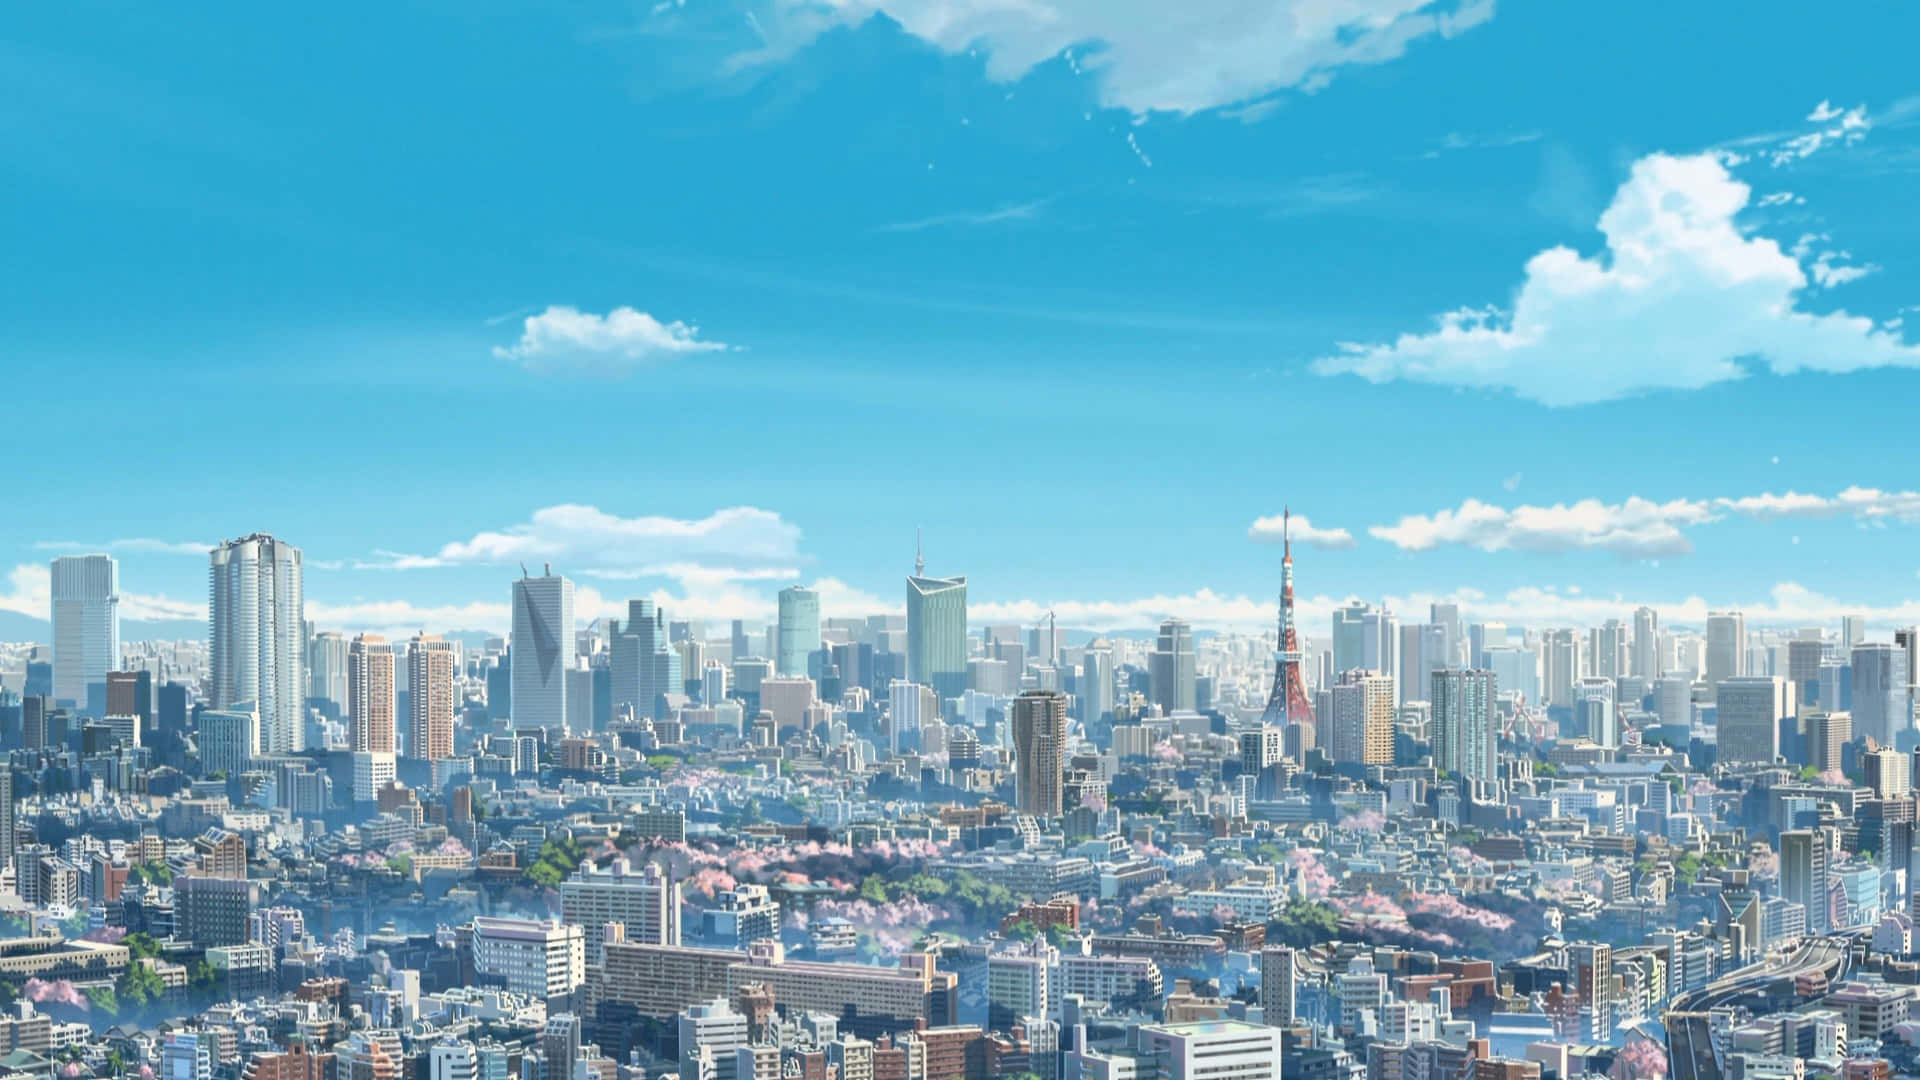 The Wonder and Beauty of Makoto Shinkai's Animated Art